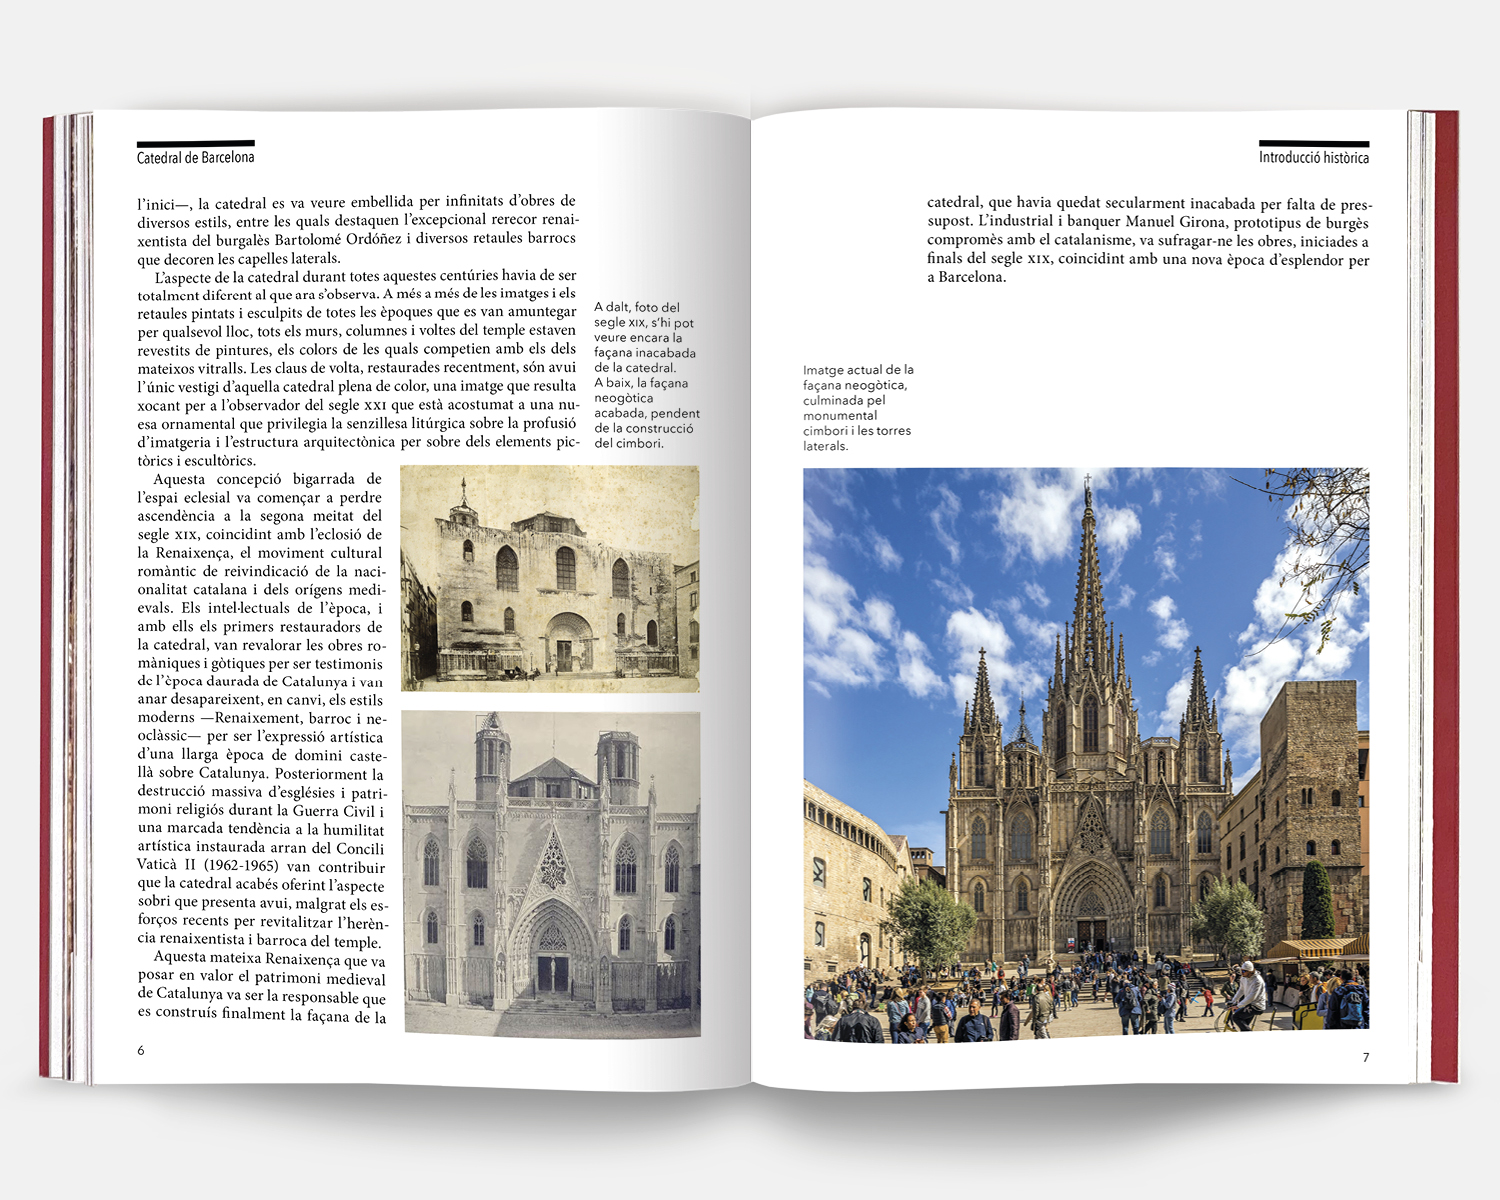 Guide de Cathédrale de Barcelone gbc 1